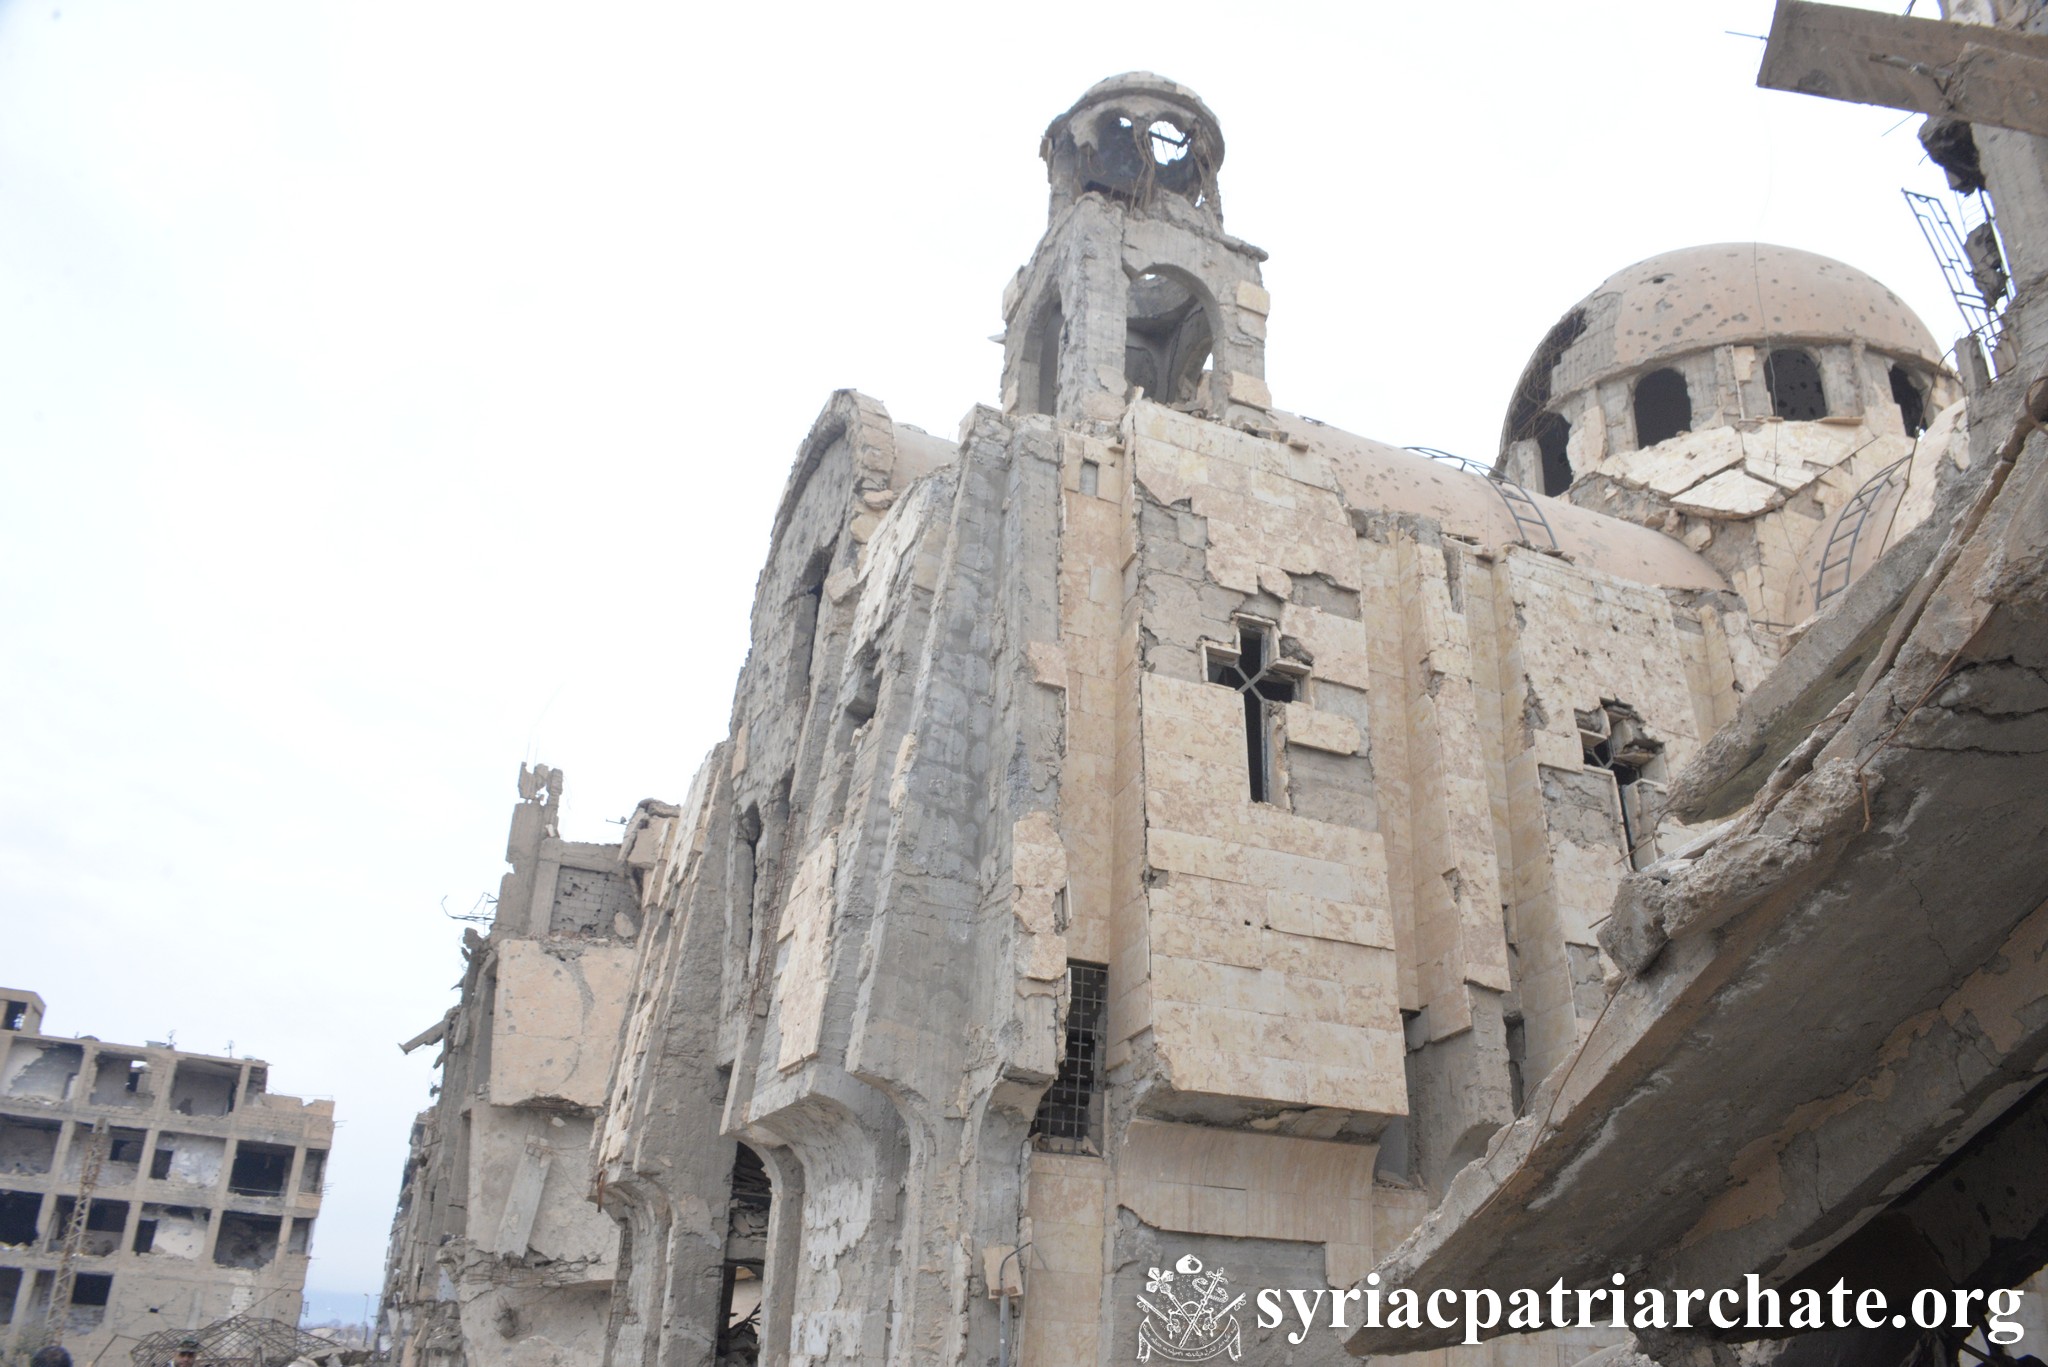 Patriarch Ignatius Aphrem II Visits the Destroyed Virgin Mary Church in Deir ez-Zor